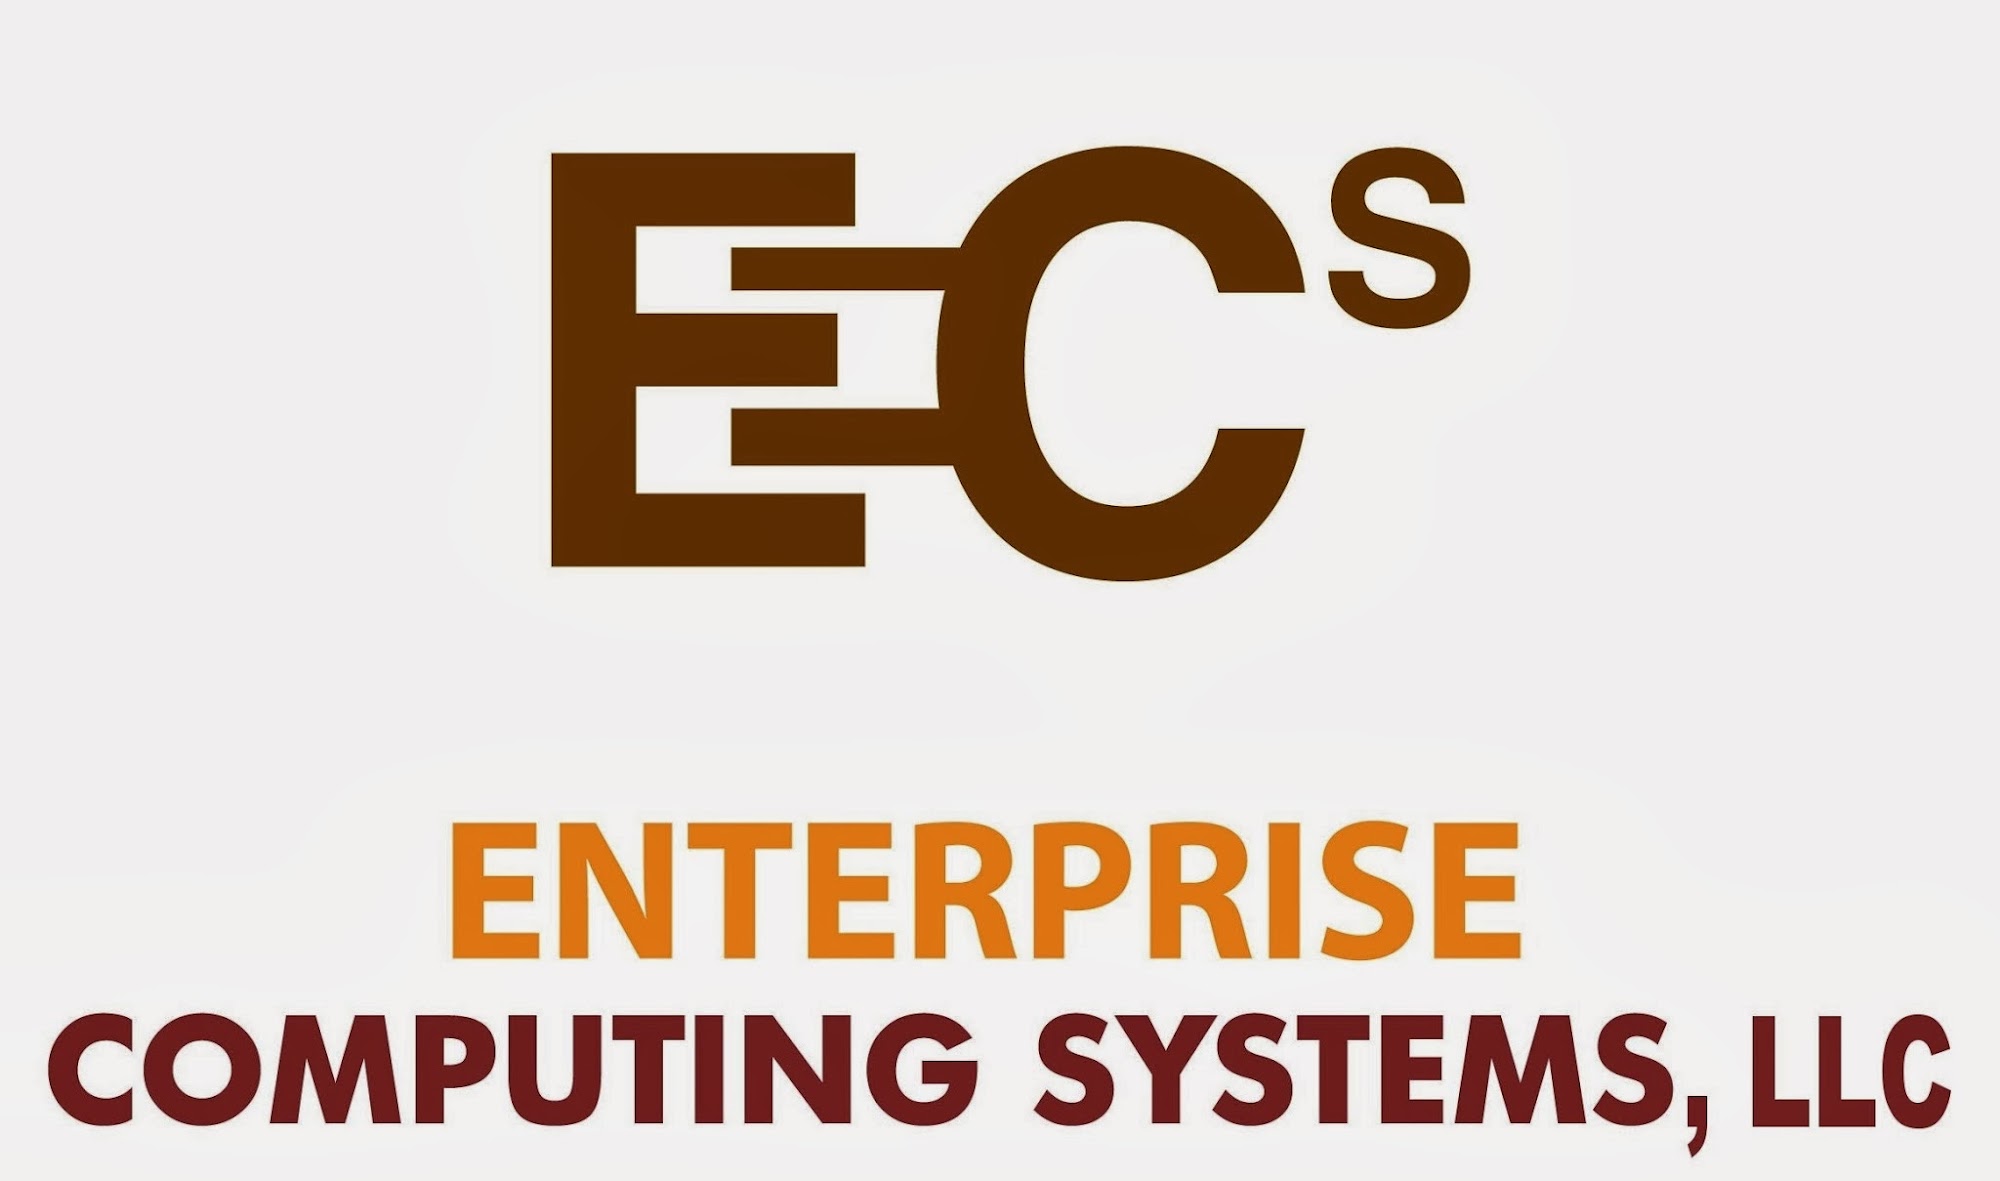 Enterprise Computing Systems, LLC